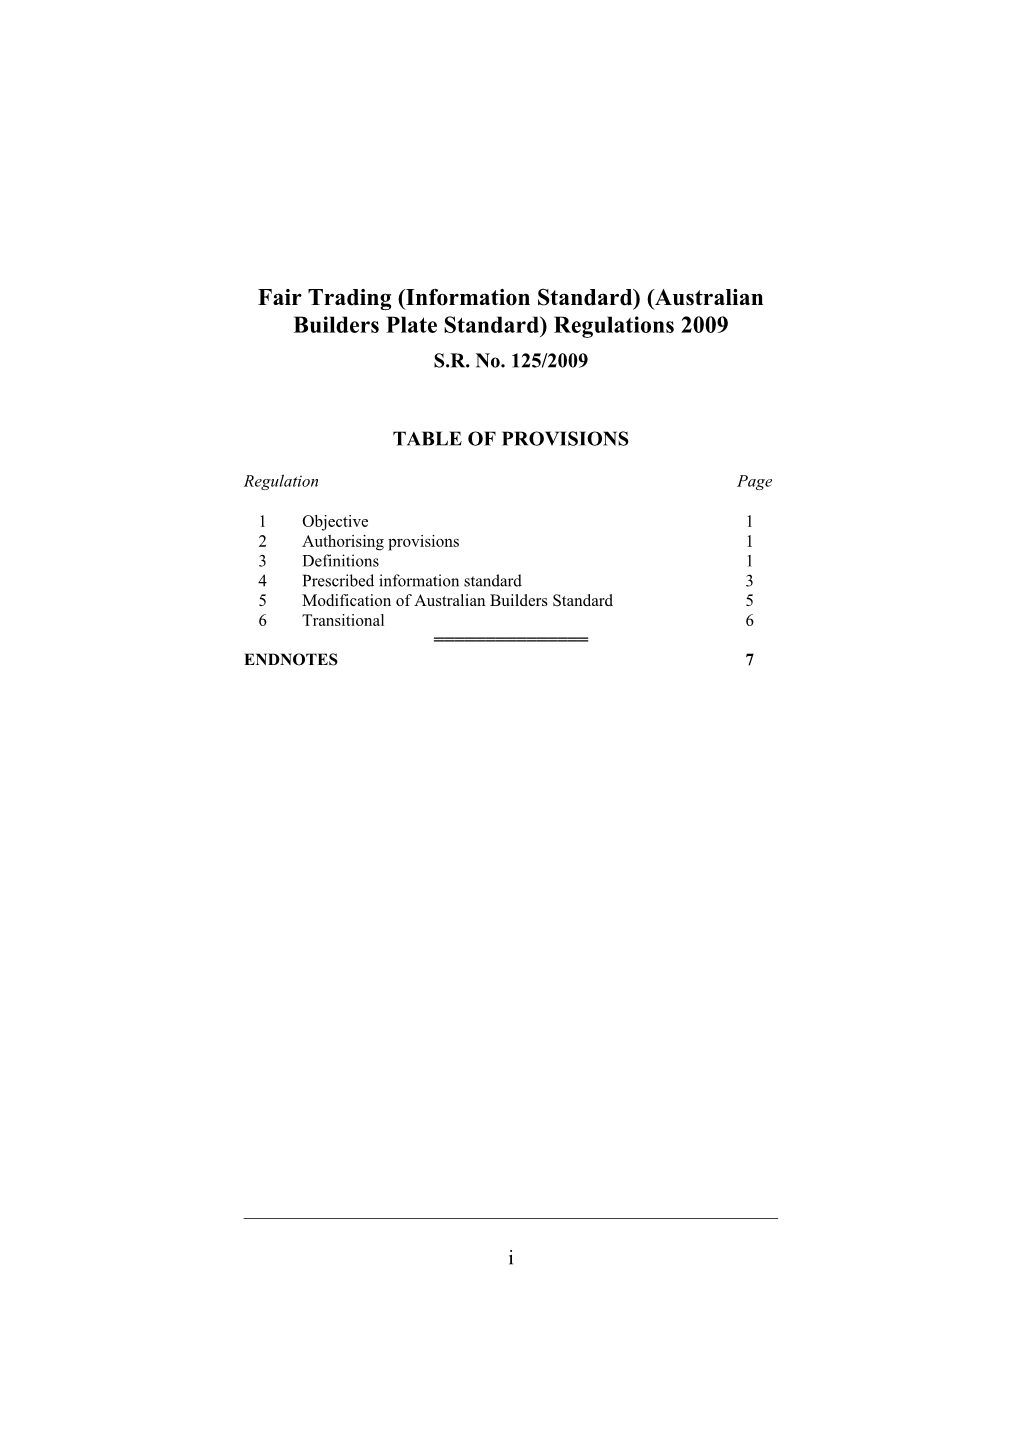 Fair Trading (Information Standard) (Australian Builders Plate Standard) Regulations 2009